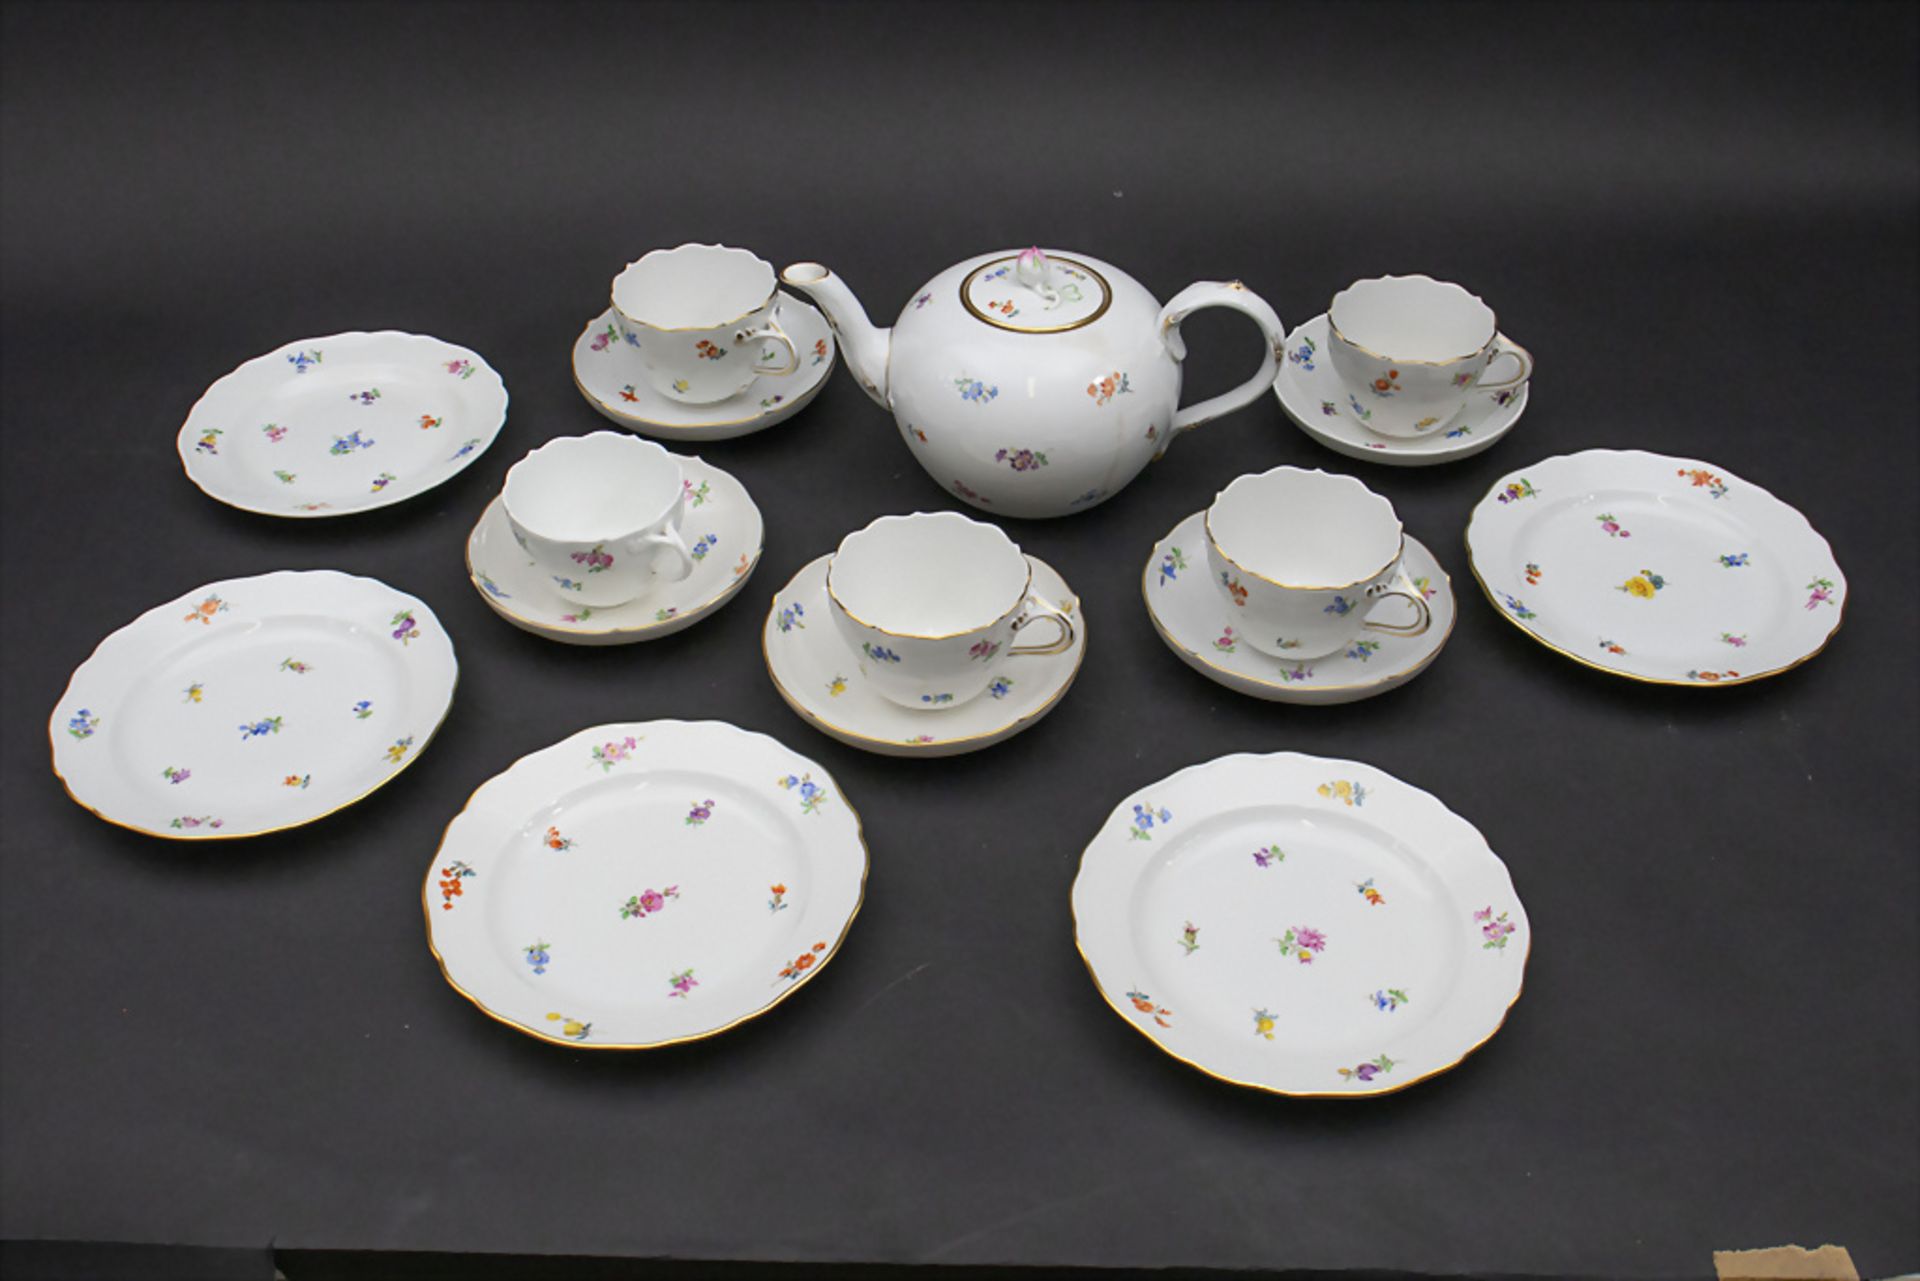 15-teiliges Teeservice mit Streublumendekor / A 15 pieces tea set with floral decor, Meissen, ...